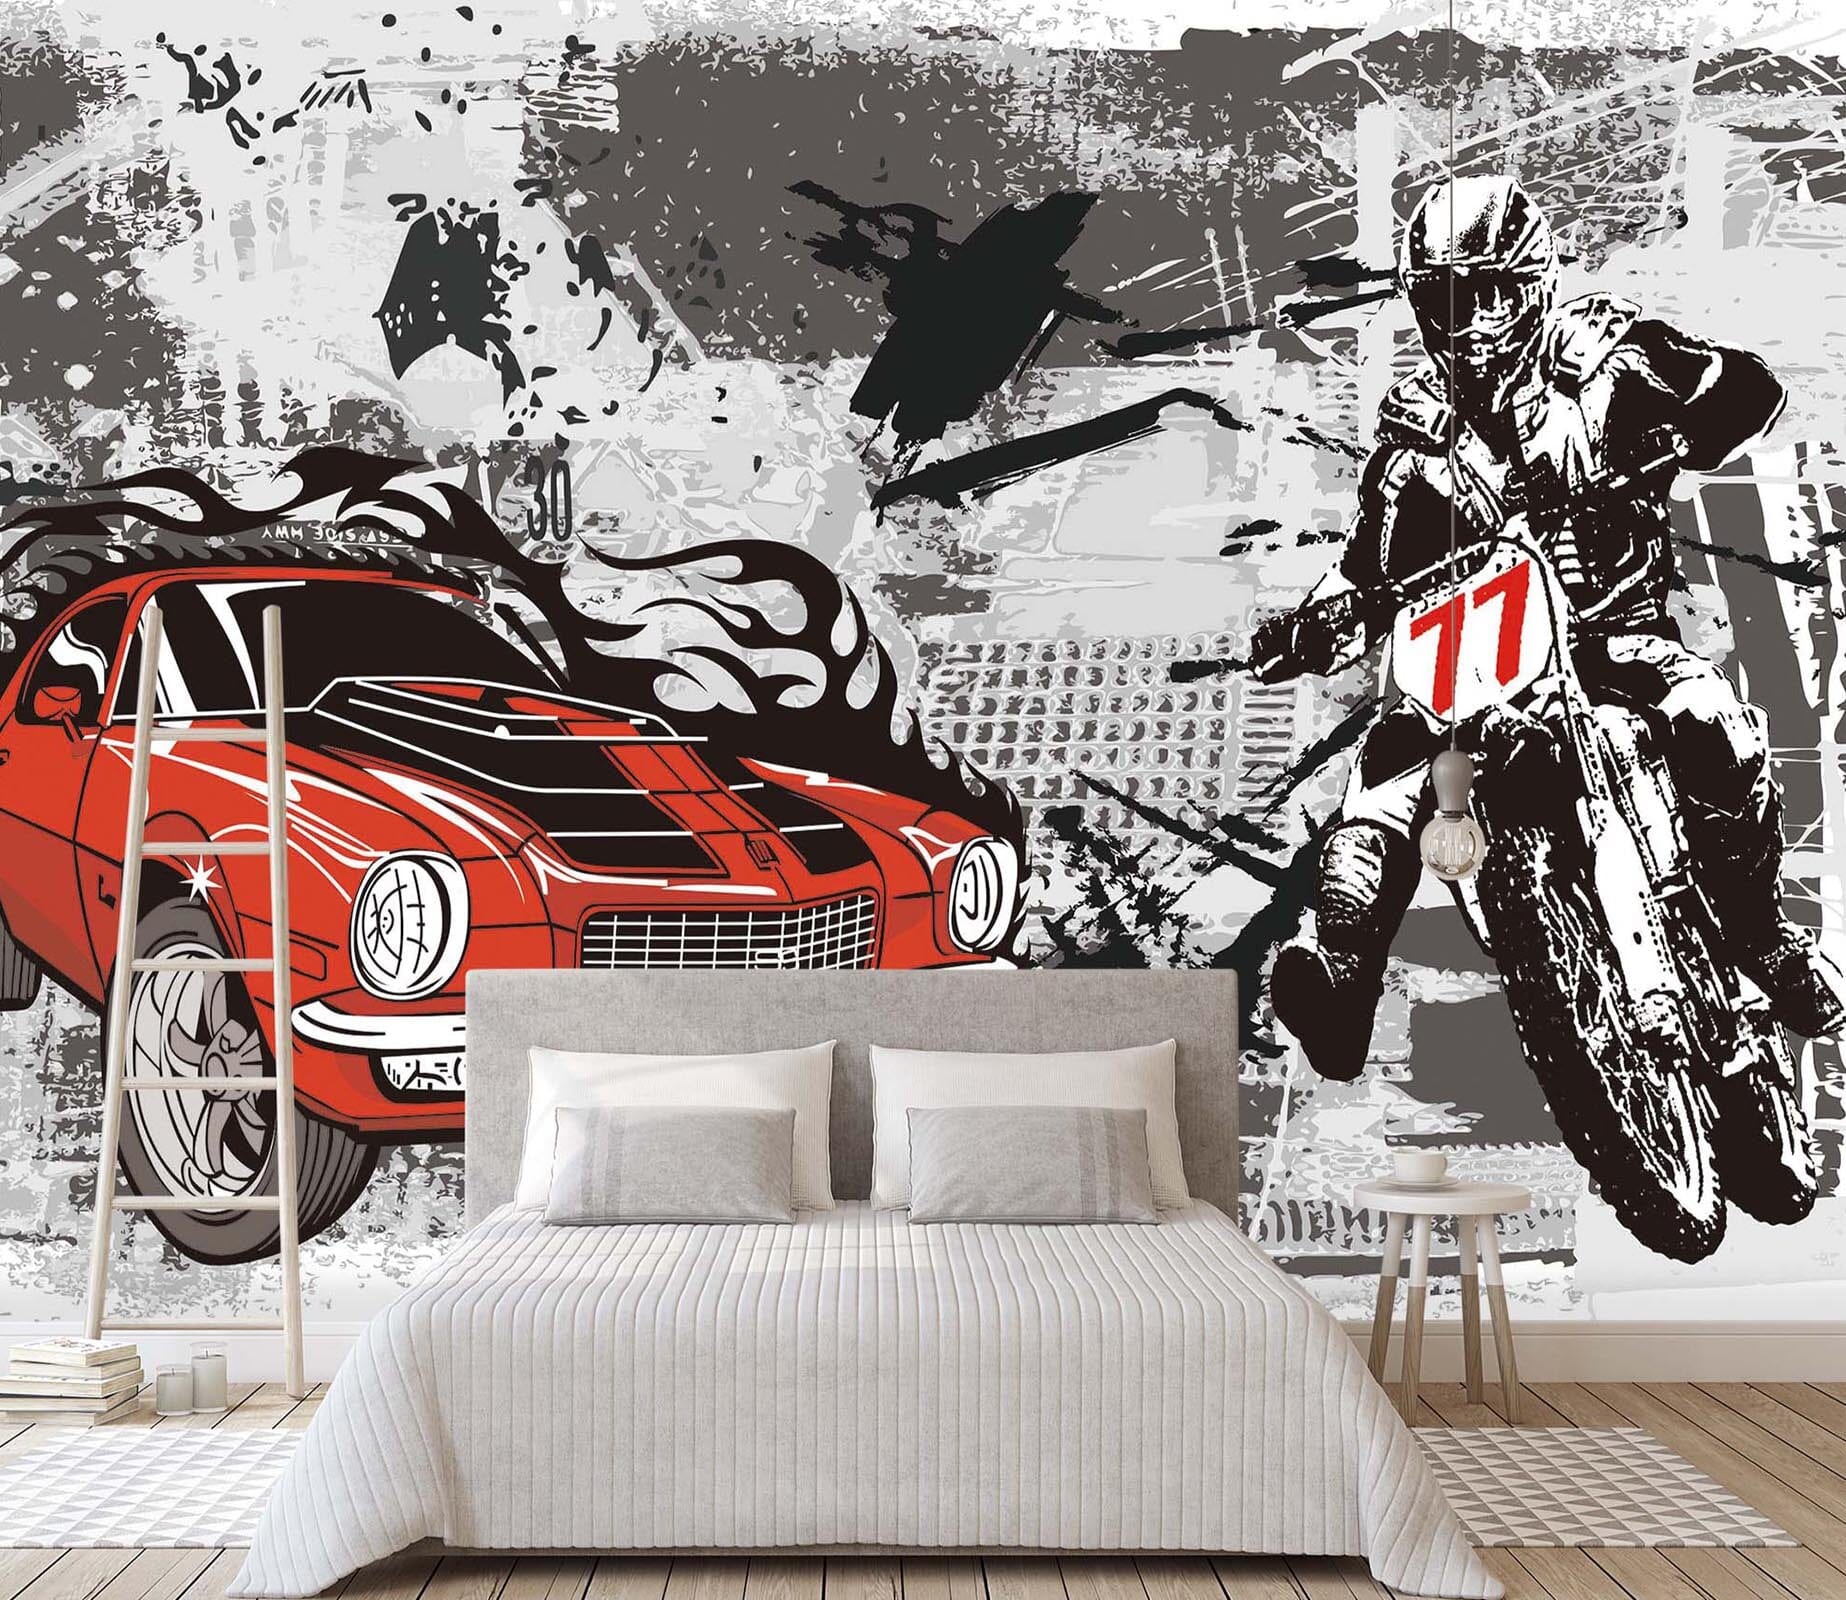 3D Hand Painted Motorcycle 062 Wall Murals Wallpaper AJ Wallpaper 2 